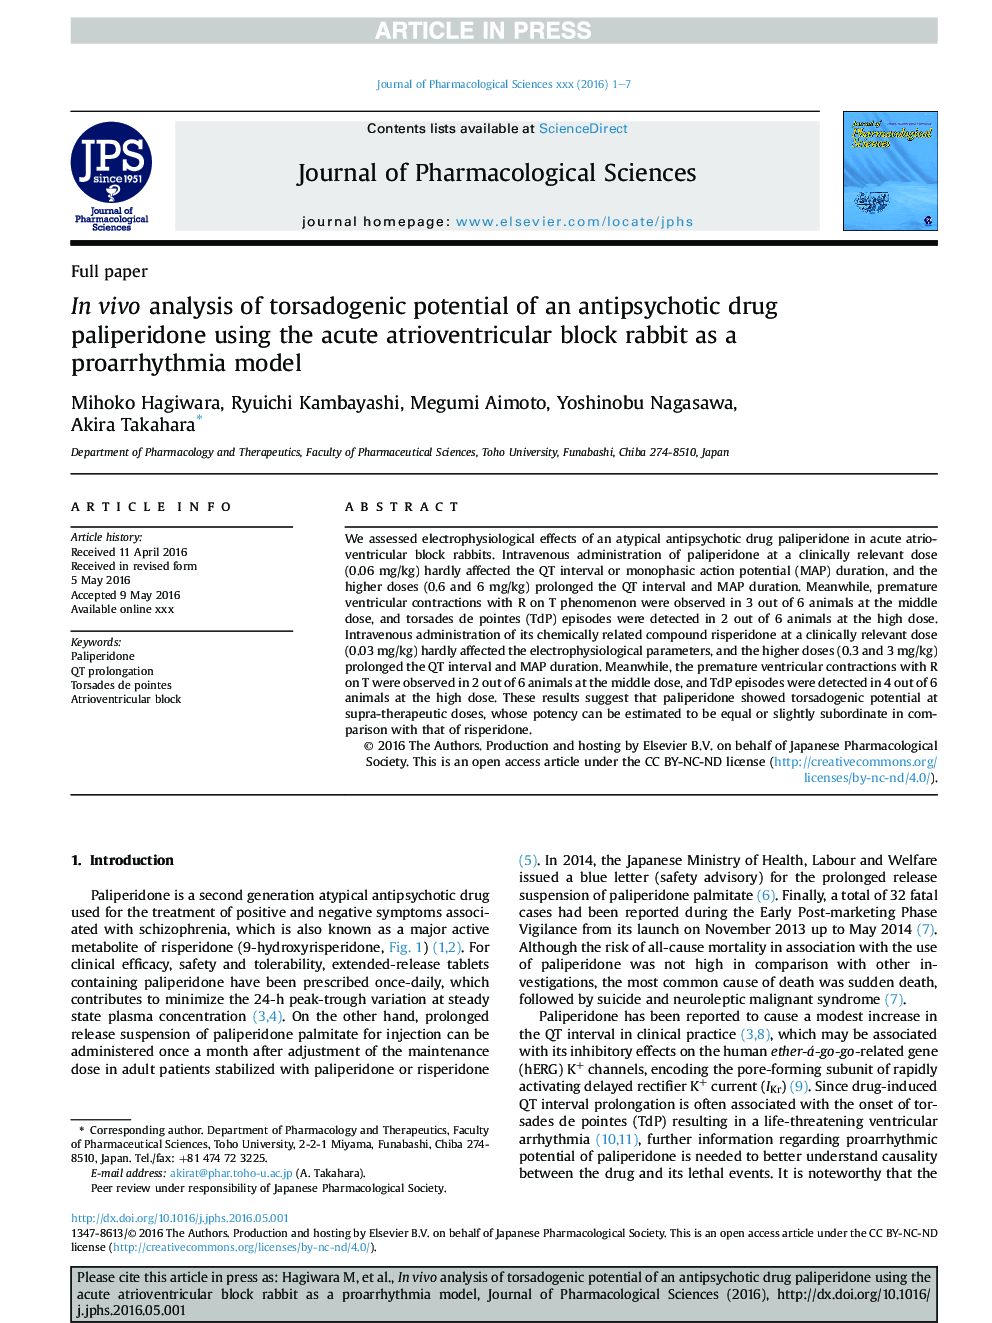 InÂ vivo analysis of torsadogenic potential of an antipsychotic drug paliperidone using the acute atrioventricular block rabbit as a proarrhythmia model